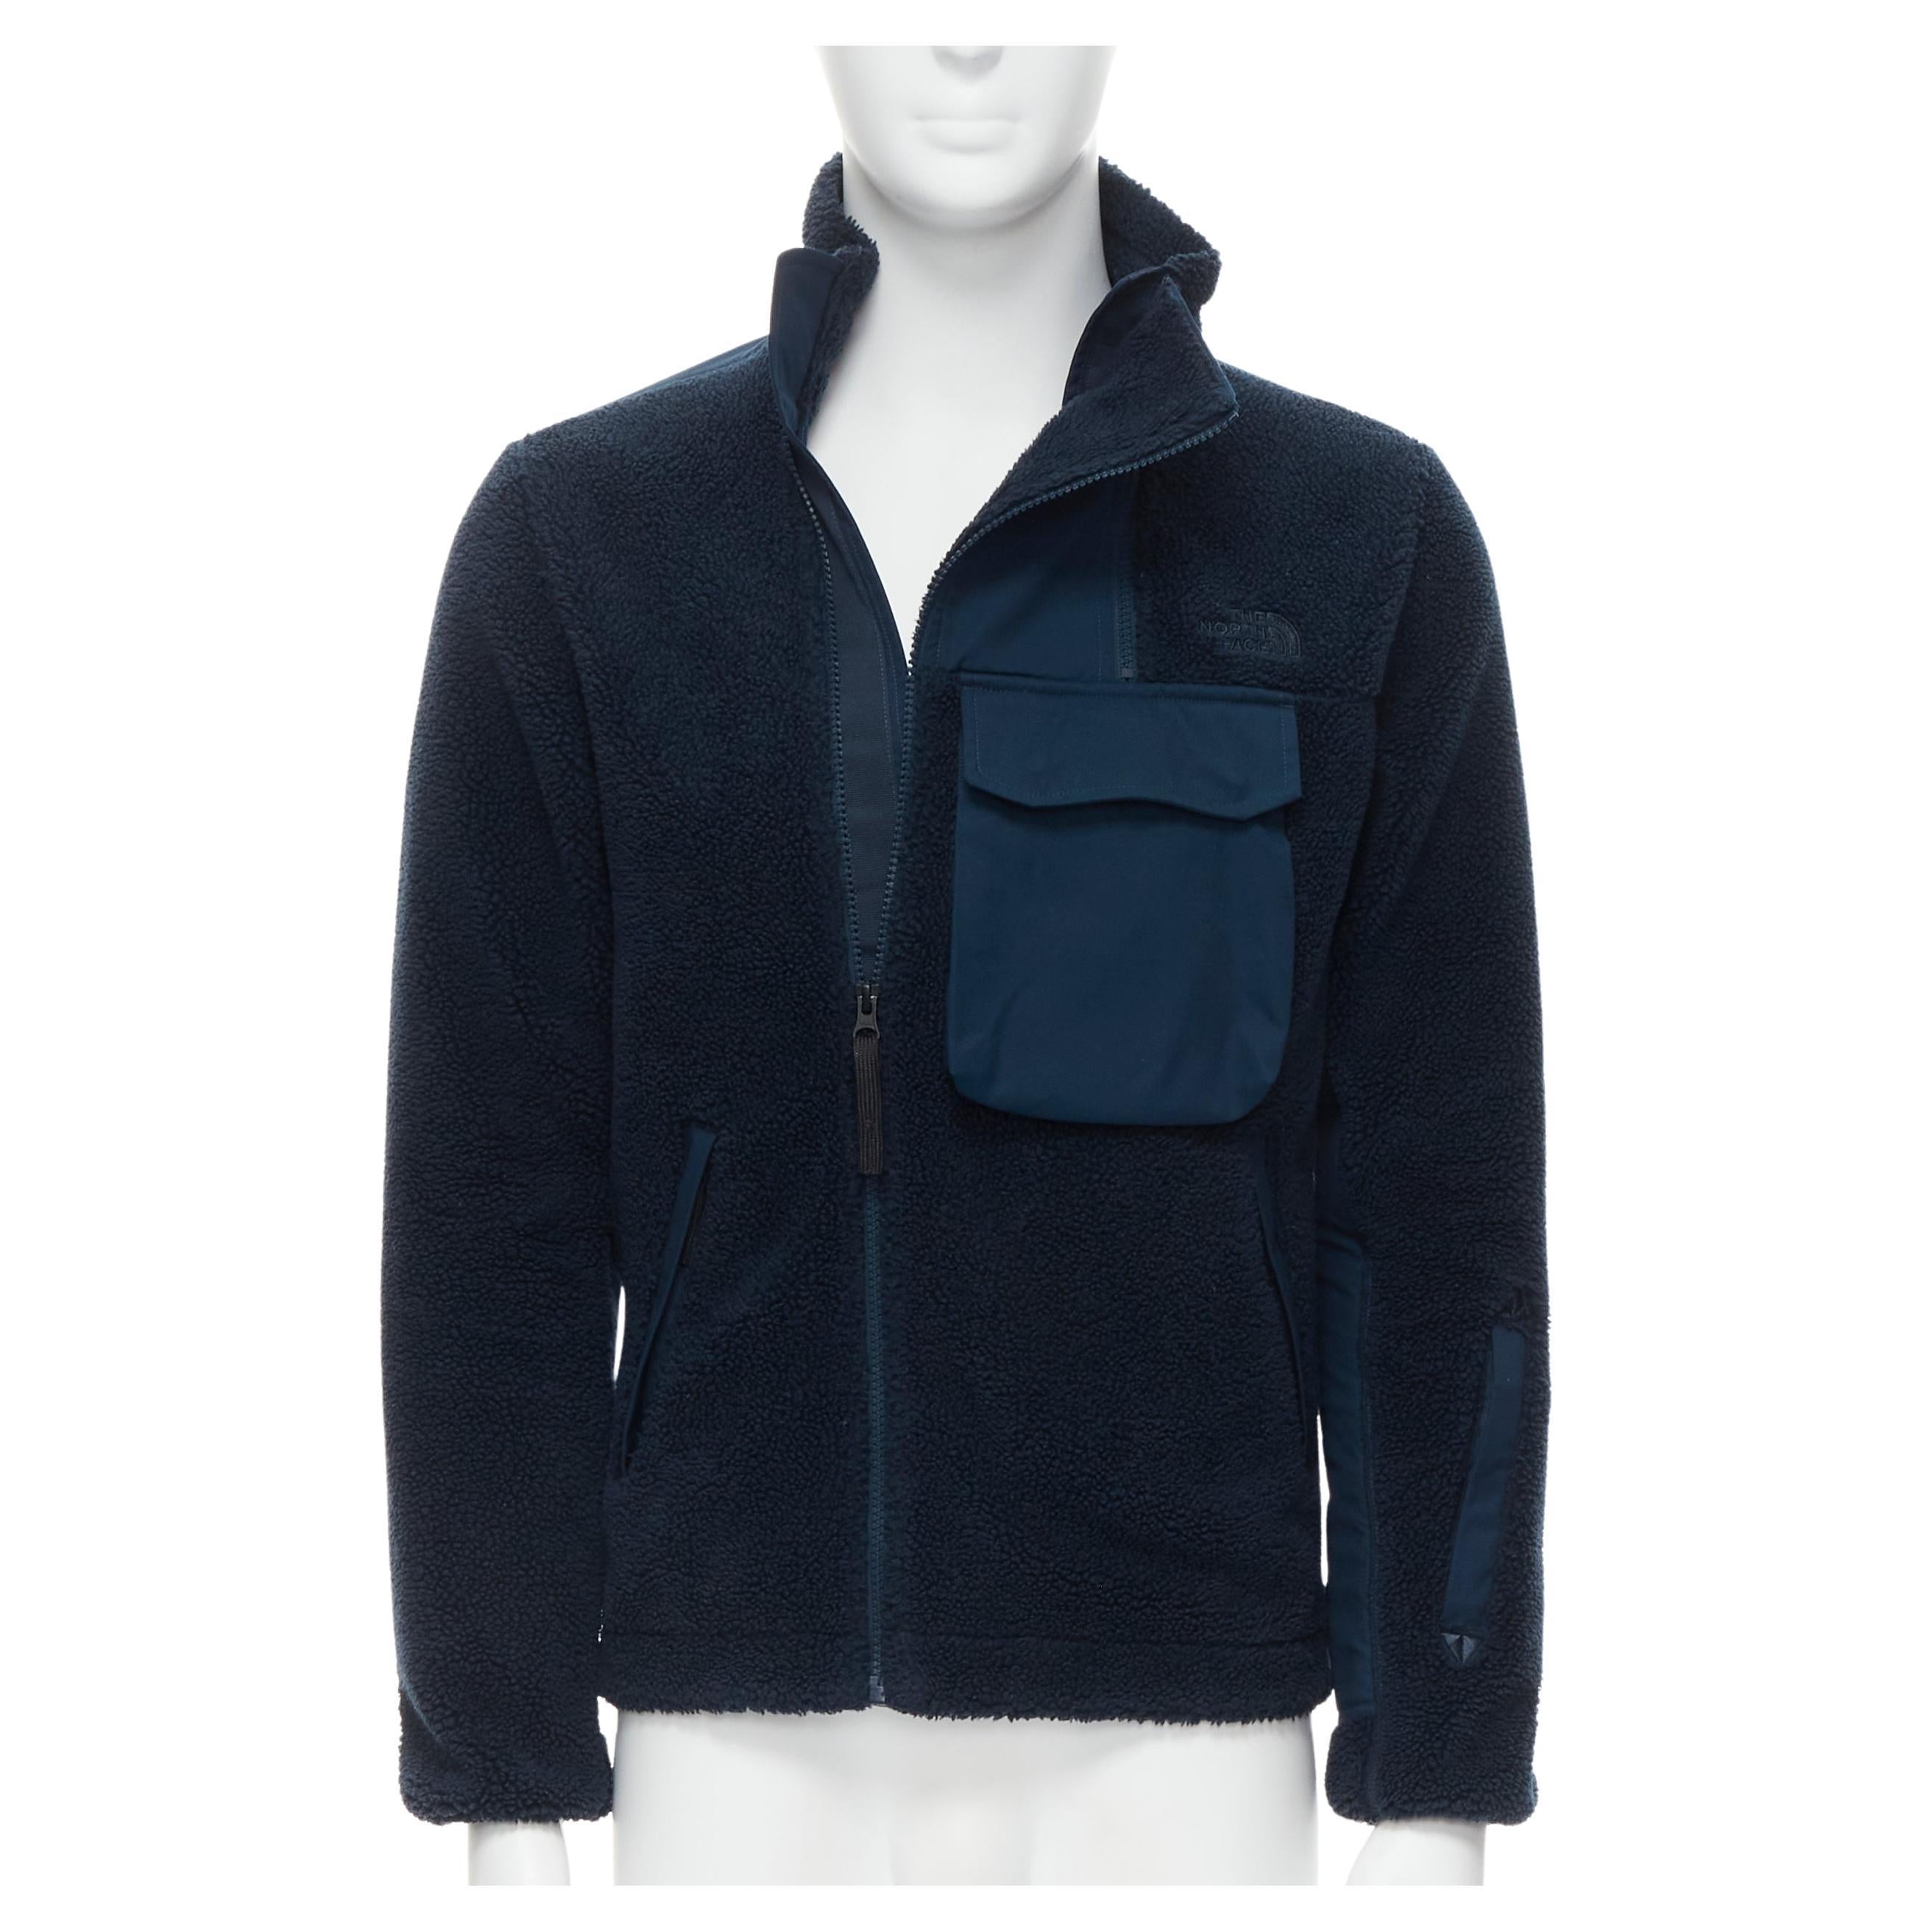 NORTH FACE navy blue fleece patch flap pocket asymmetric zip up jacket XS S For Sale